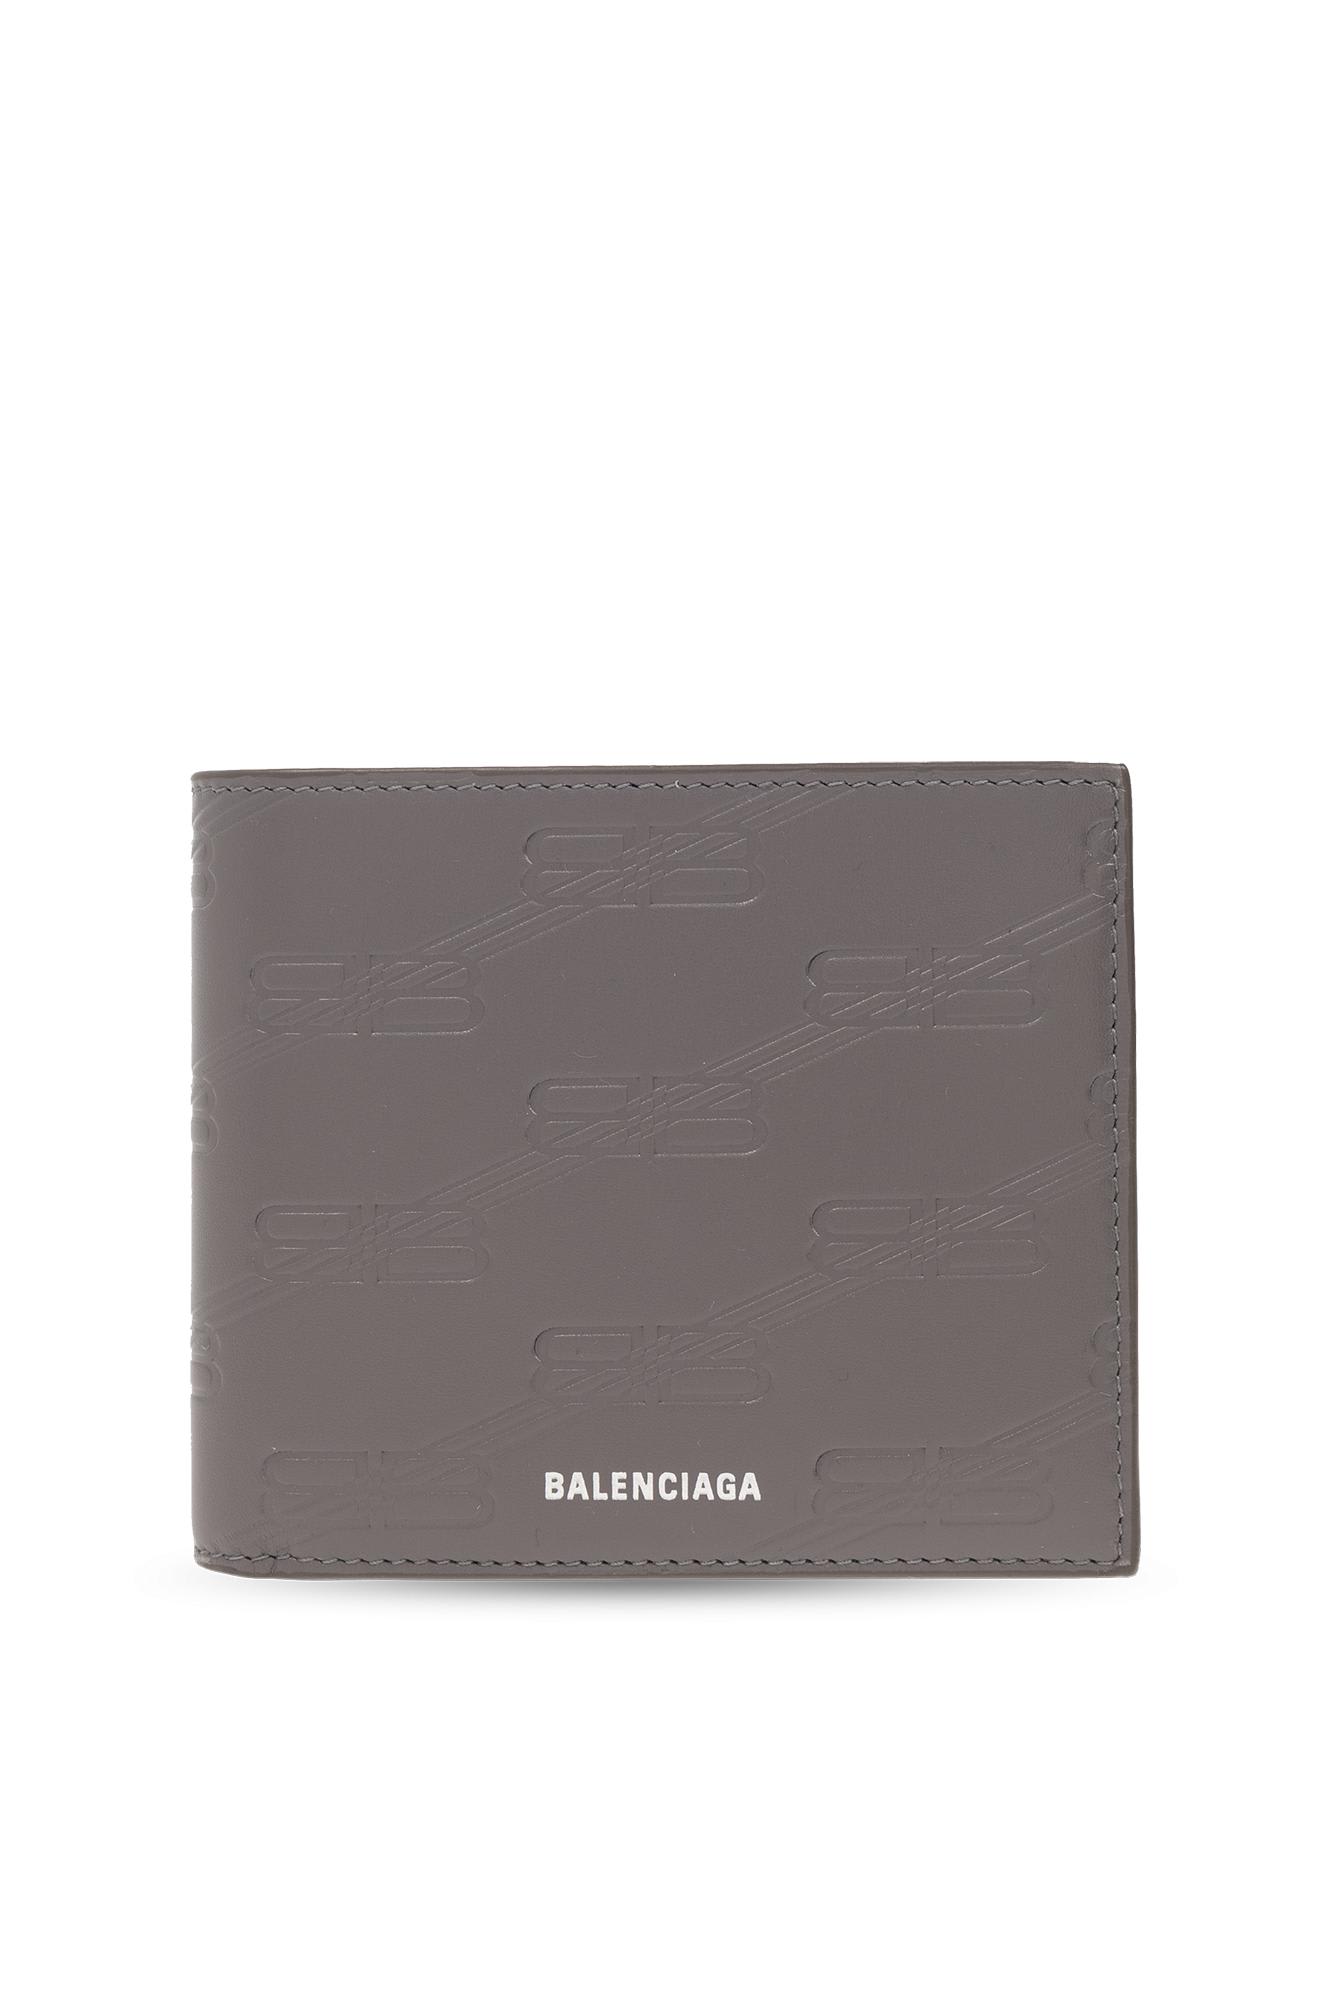 Balenciaga Leather Bifold Wallet In Grey